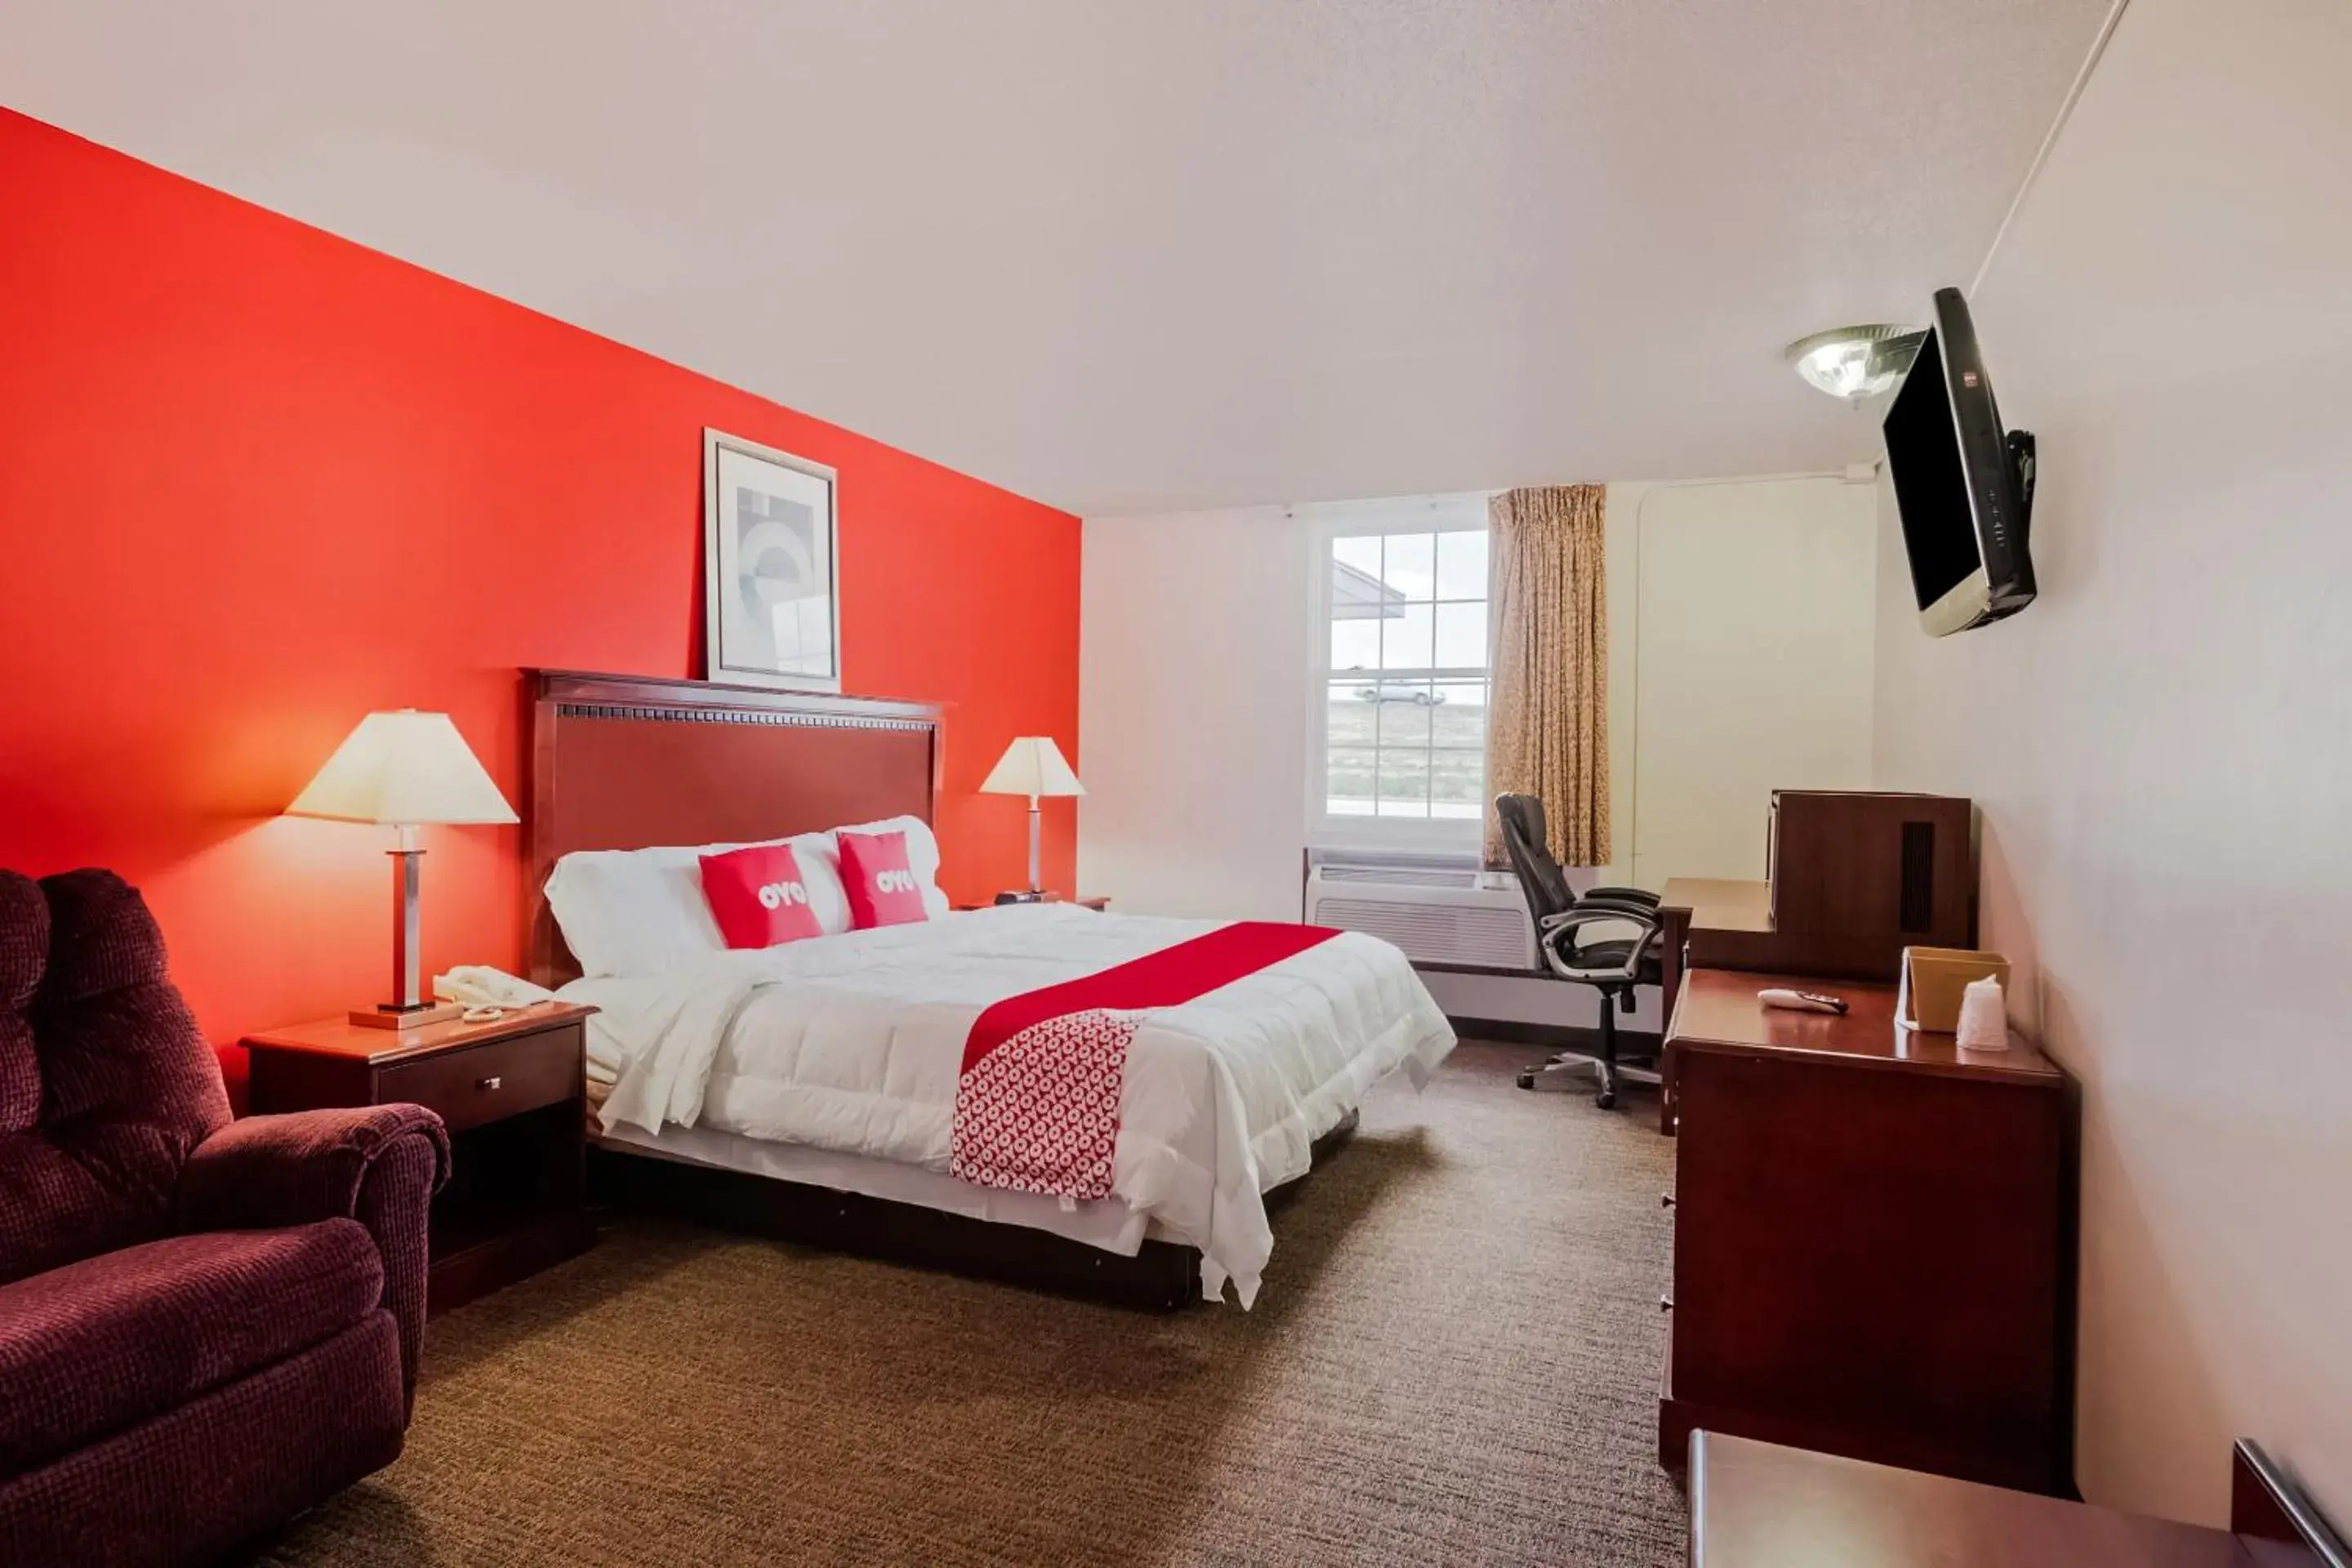 Bedroom in OYO Hotel Morton East Peoria I-74